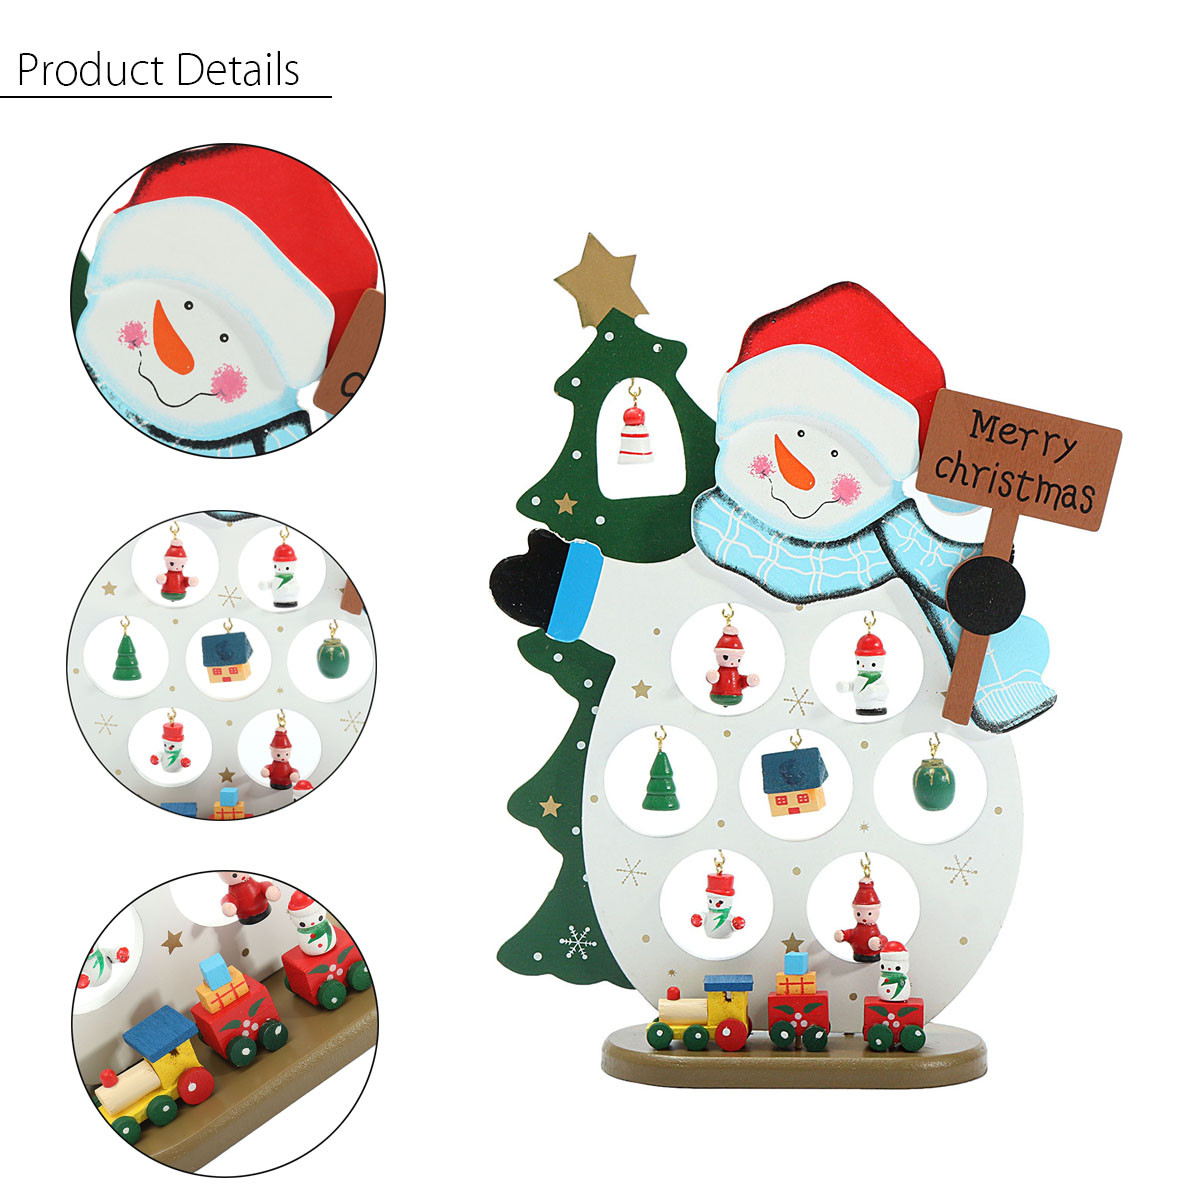 Wooden-Christmas-Snowman-Ornament-Christmas-Decoration-Pendant-Desktop-Decoration-Gift-for-Children--1220161-2